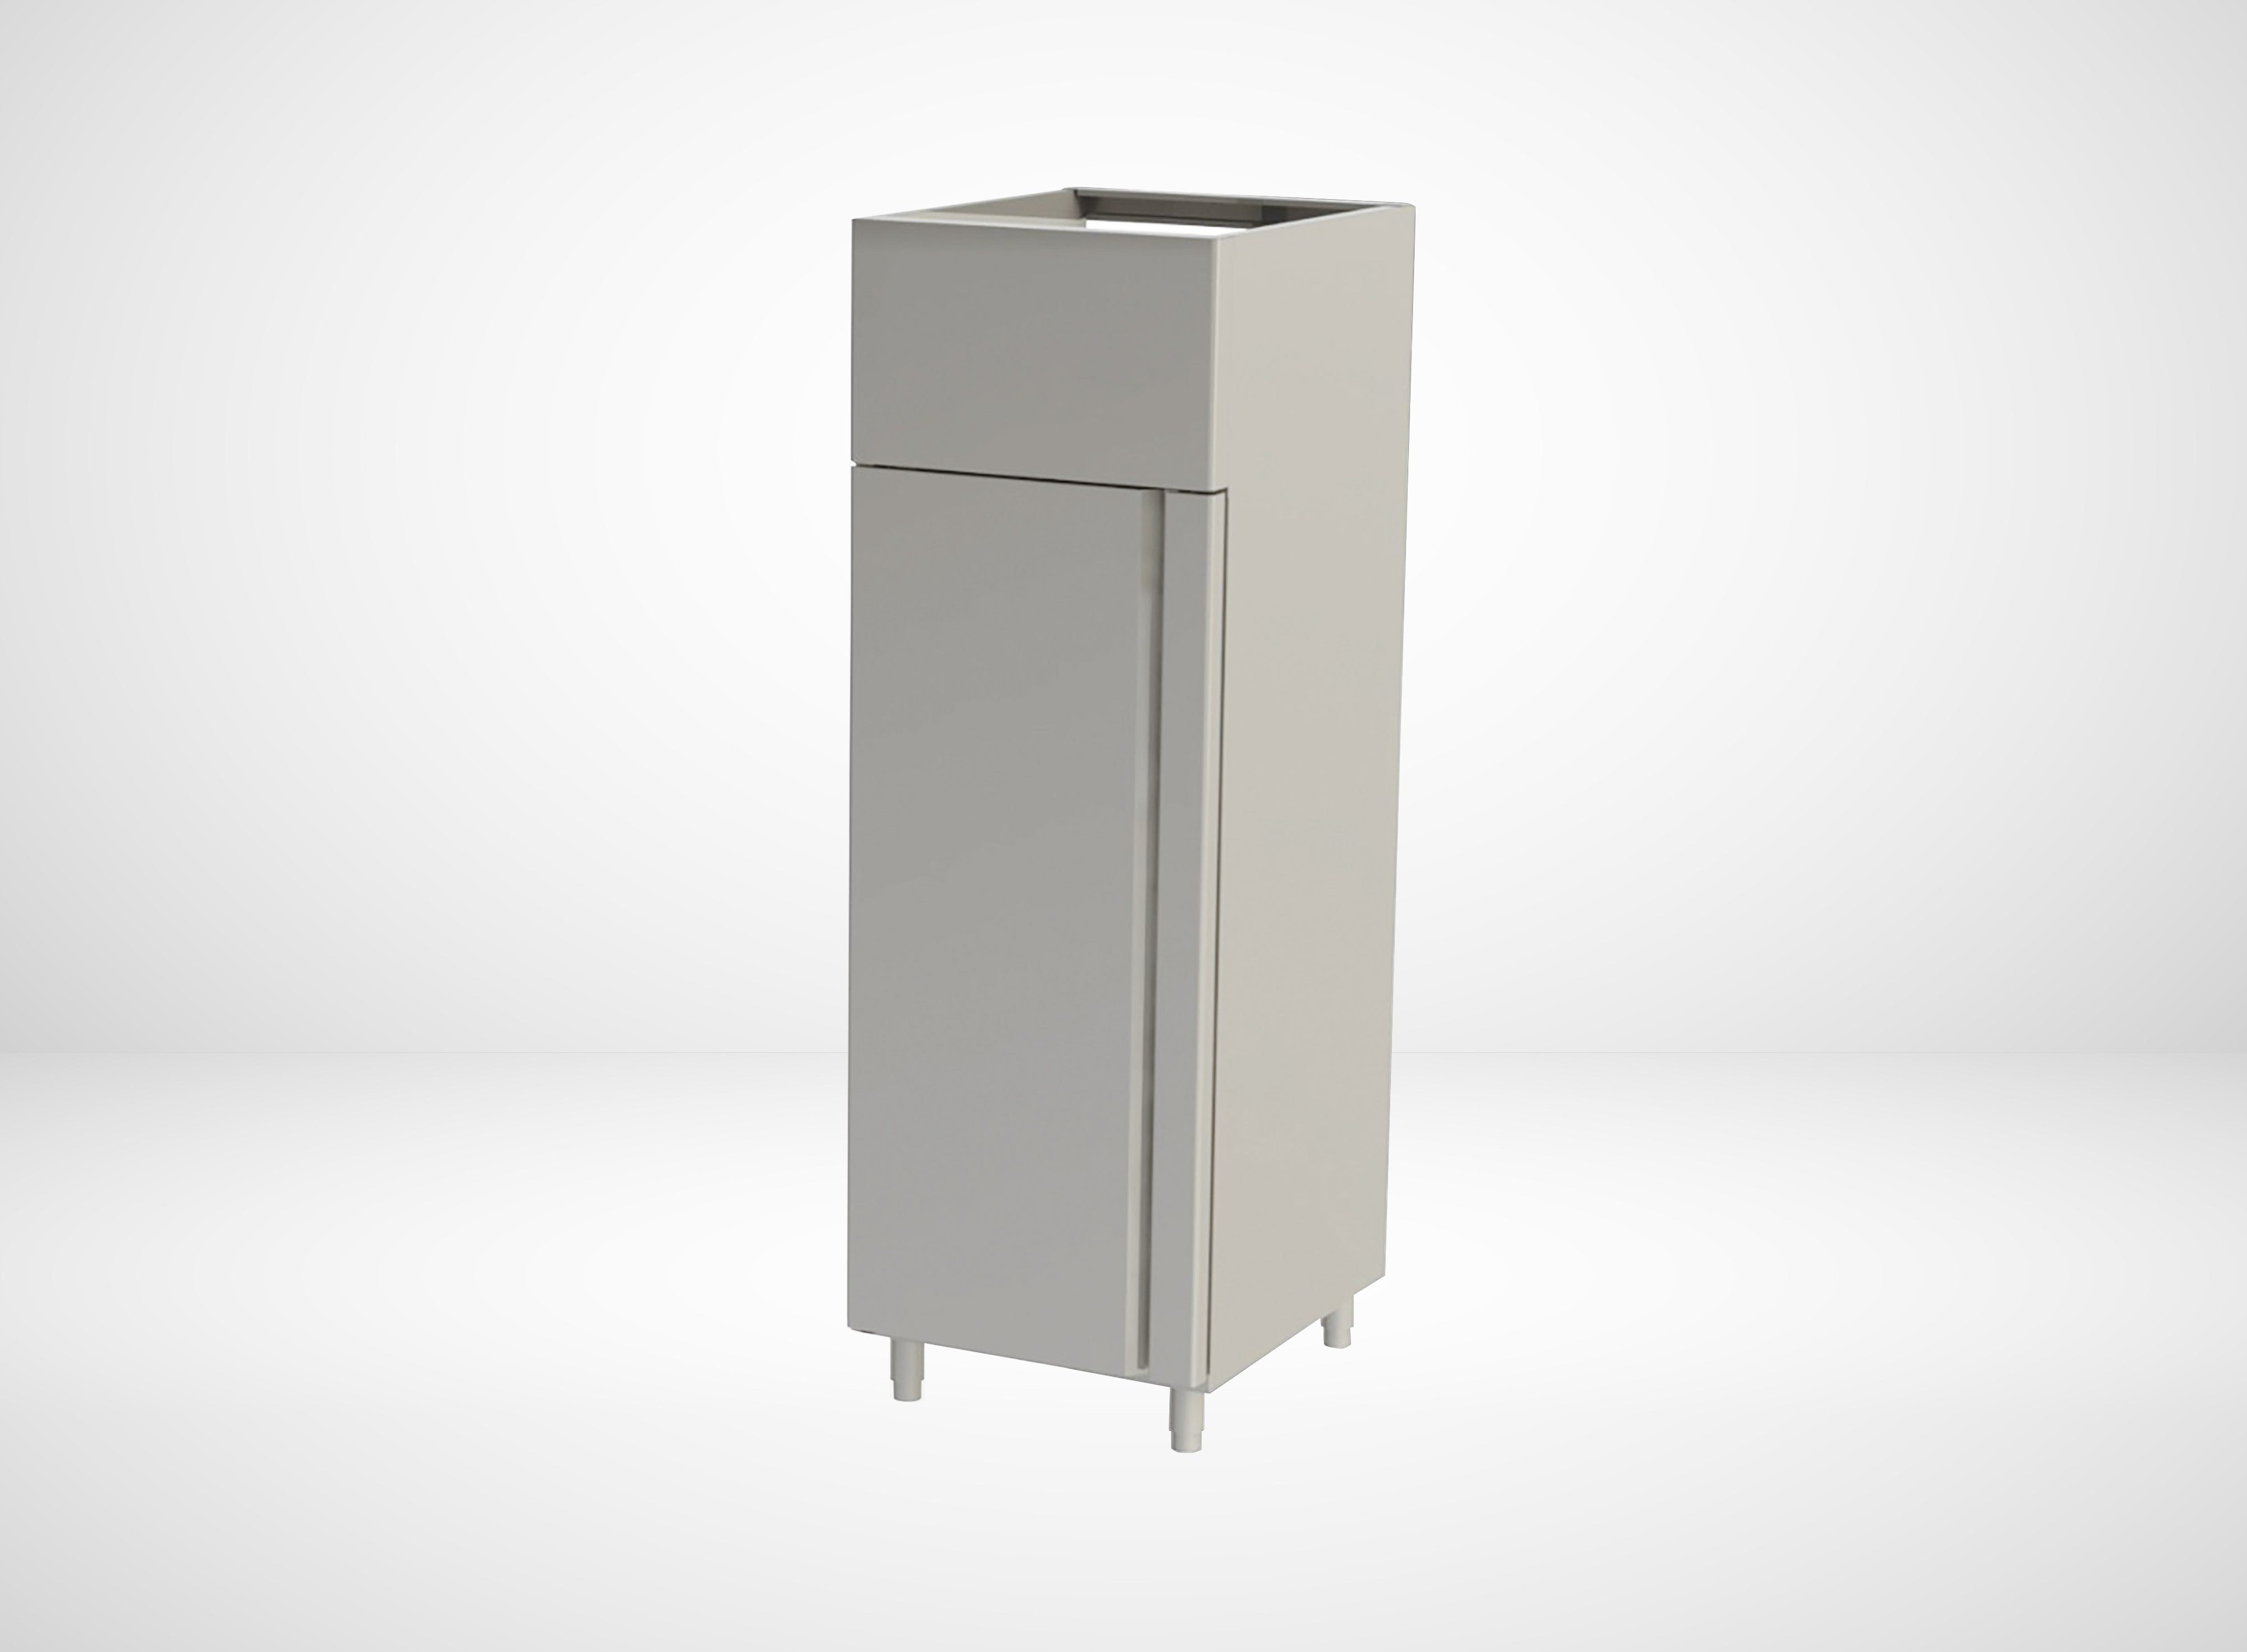 Vertical Type Refrigerators Gastronom Series